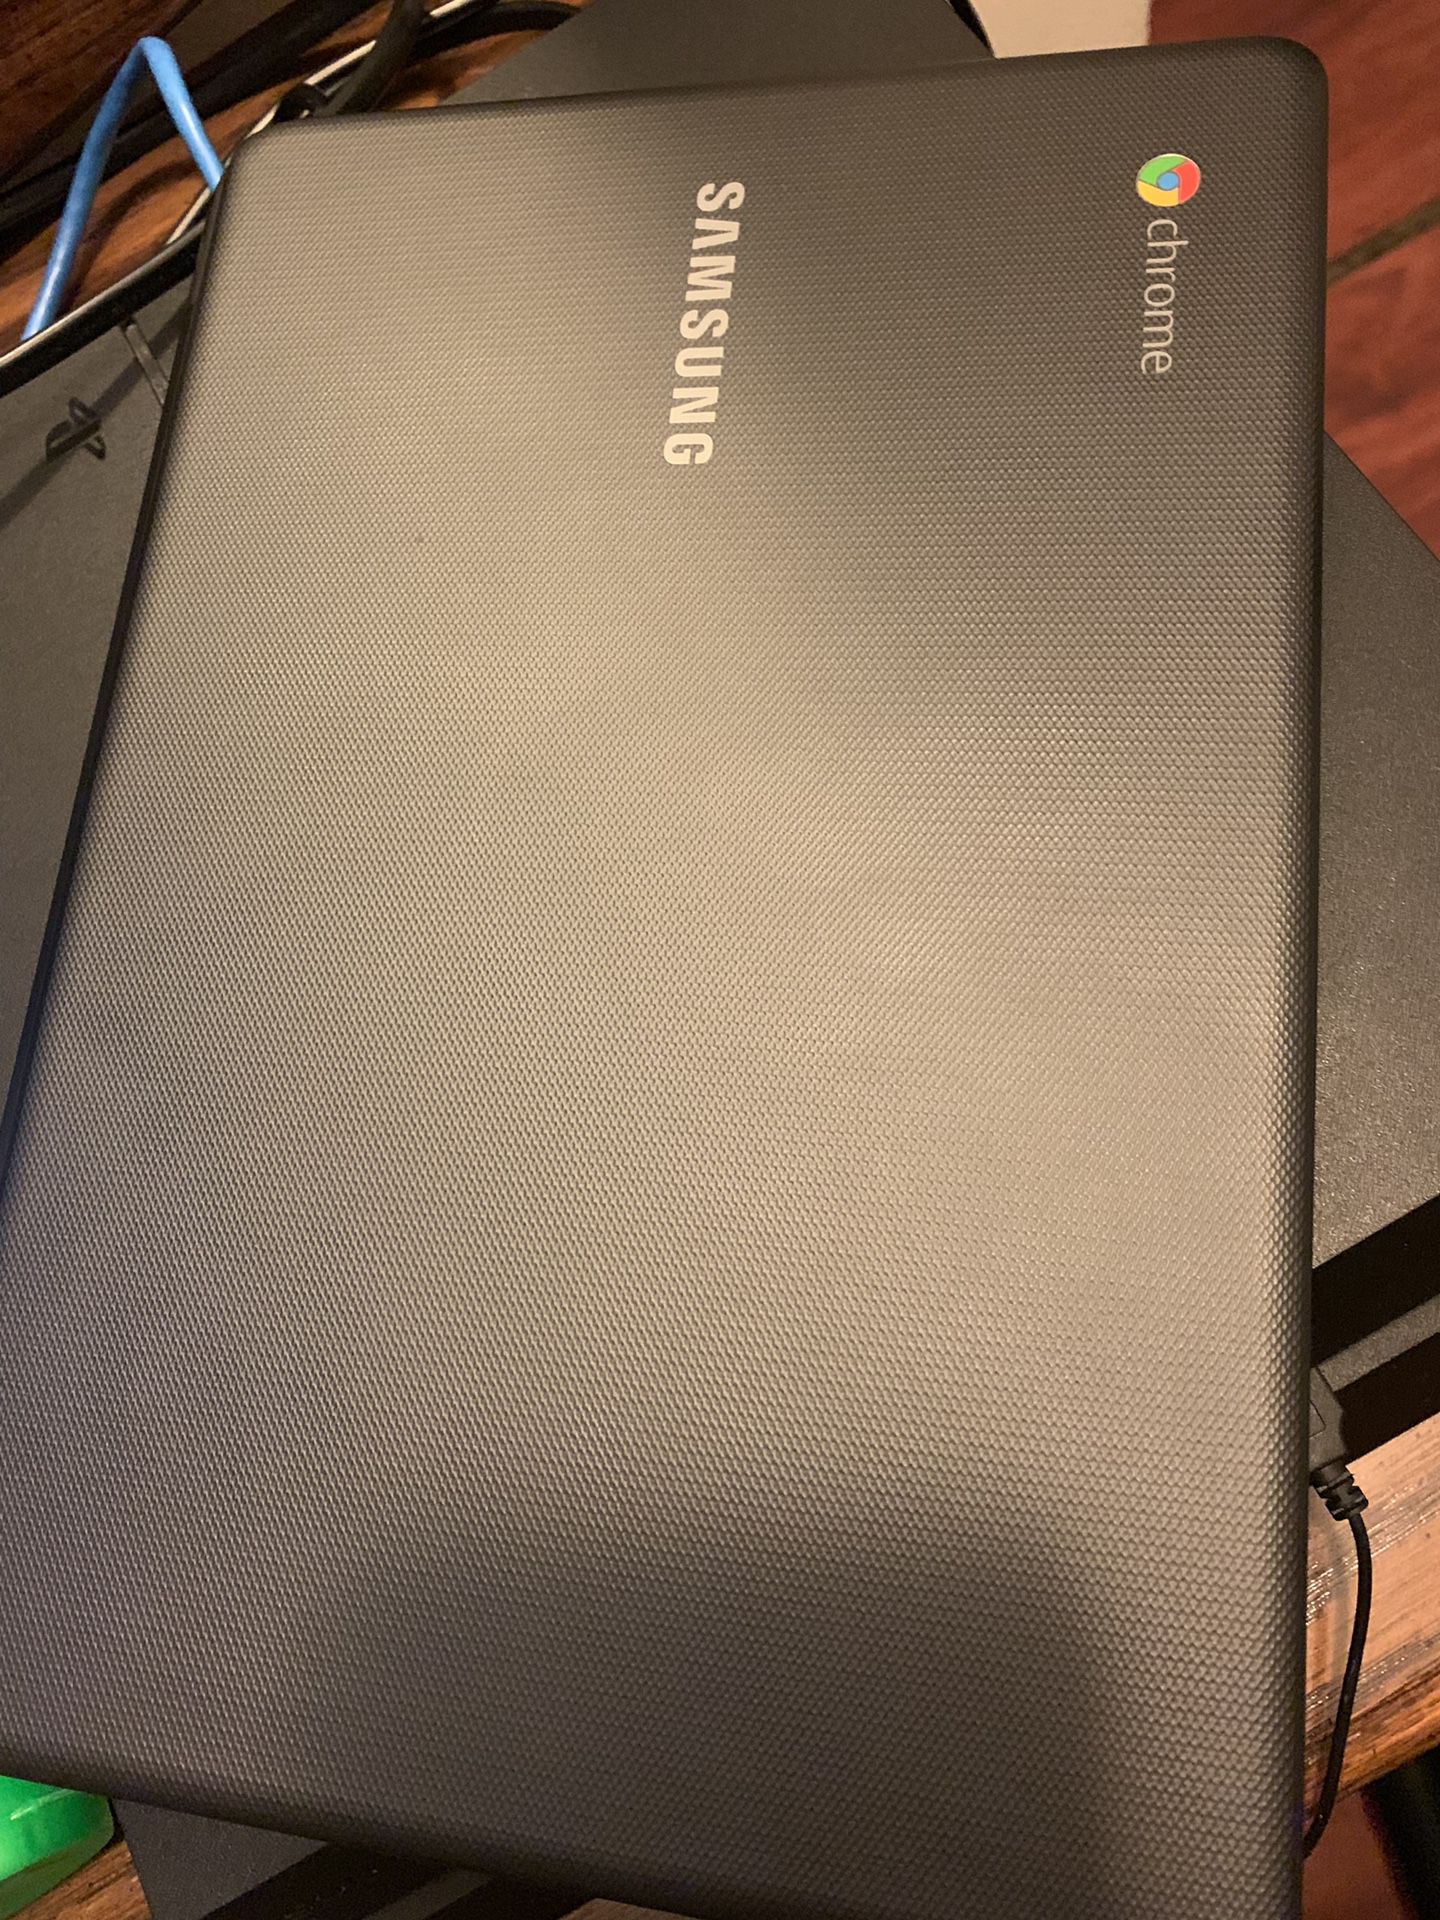 Samsung Chromebook 3 (11.6)